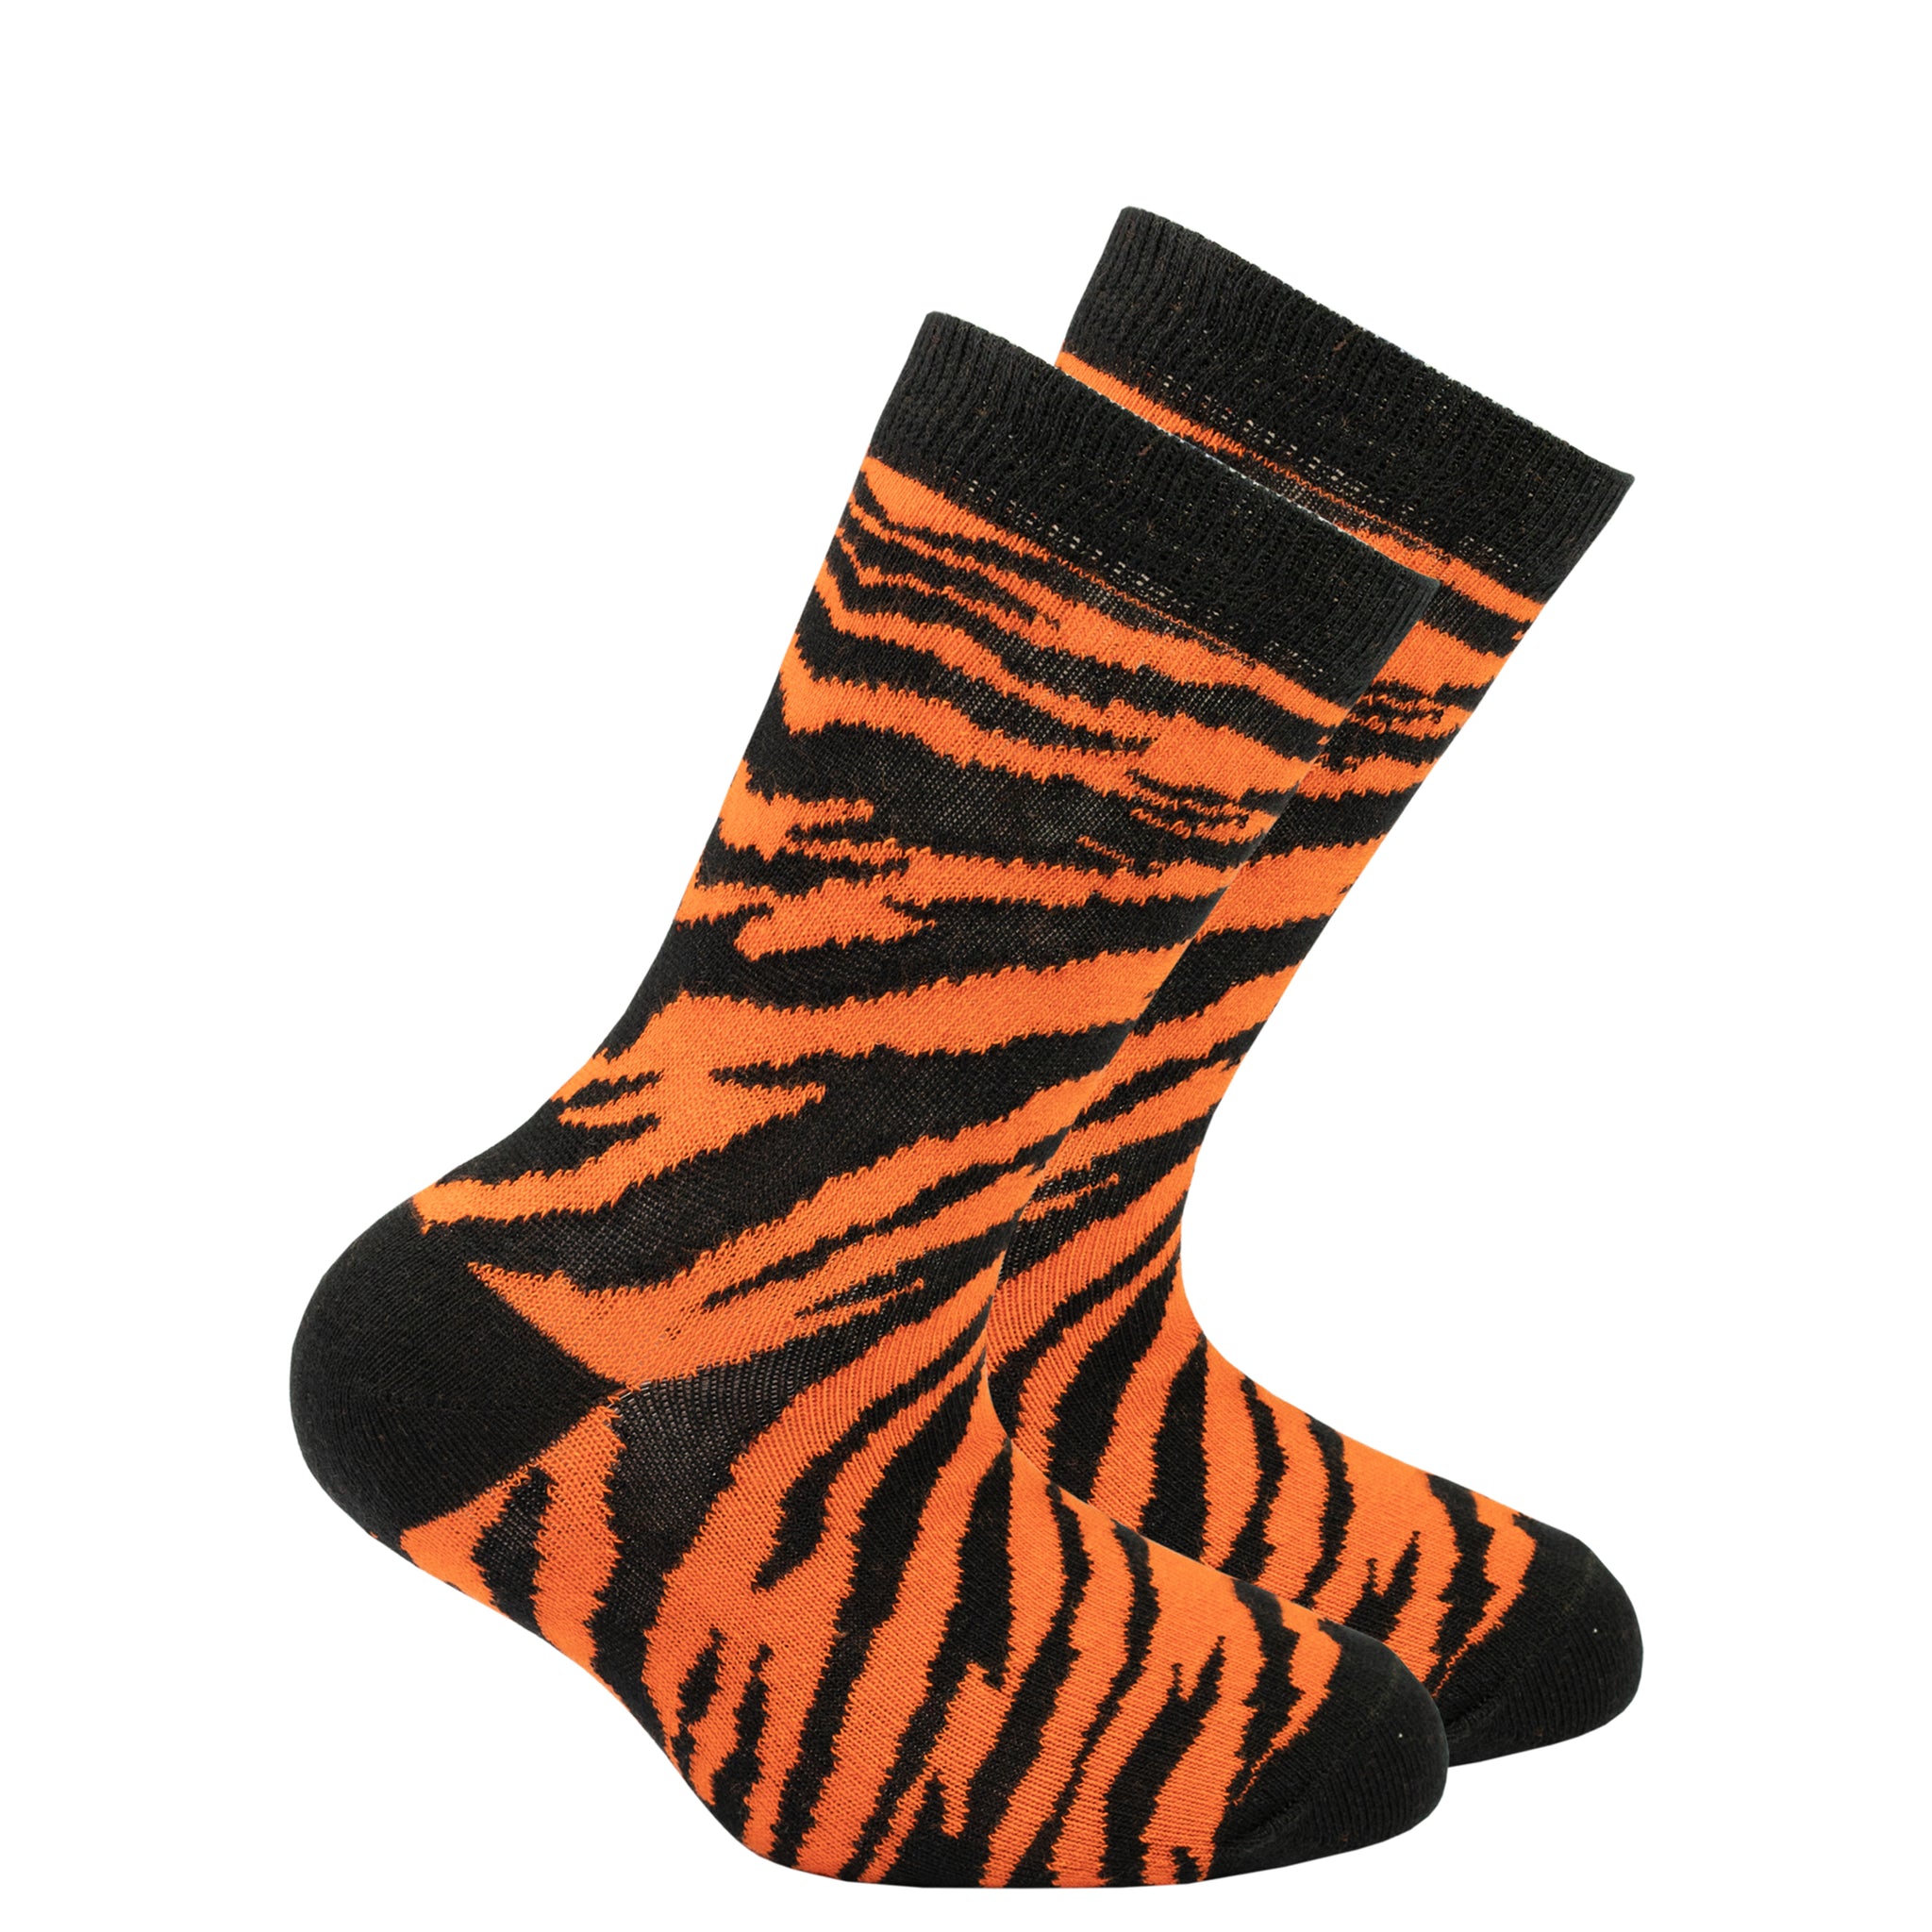 Kids Tiger Socks orange and black